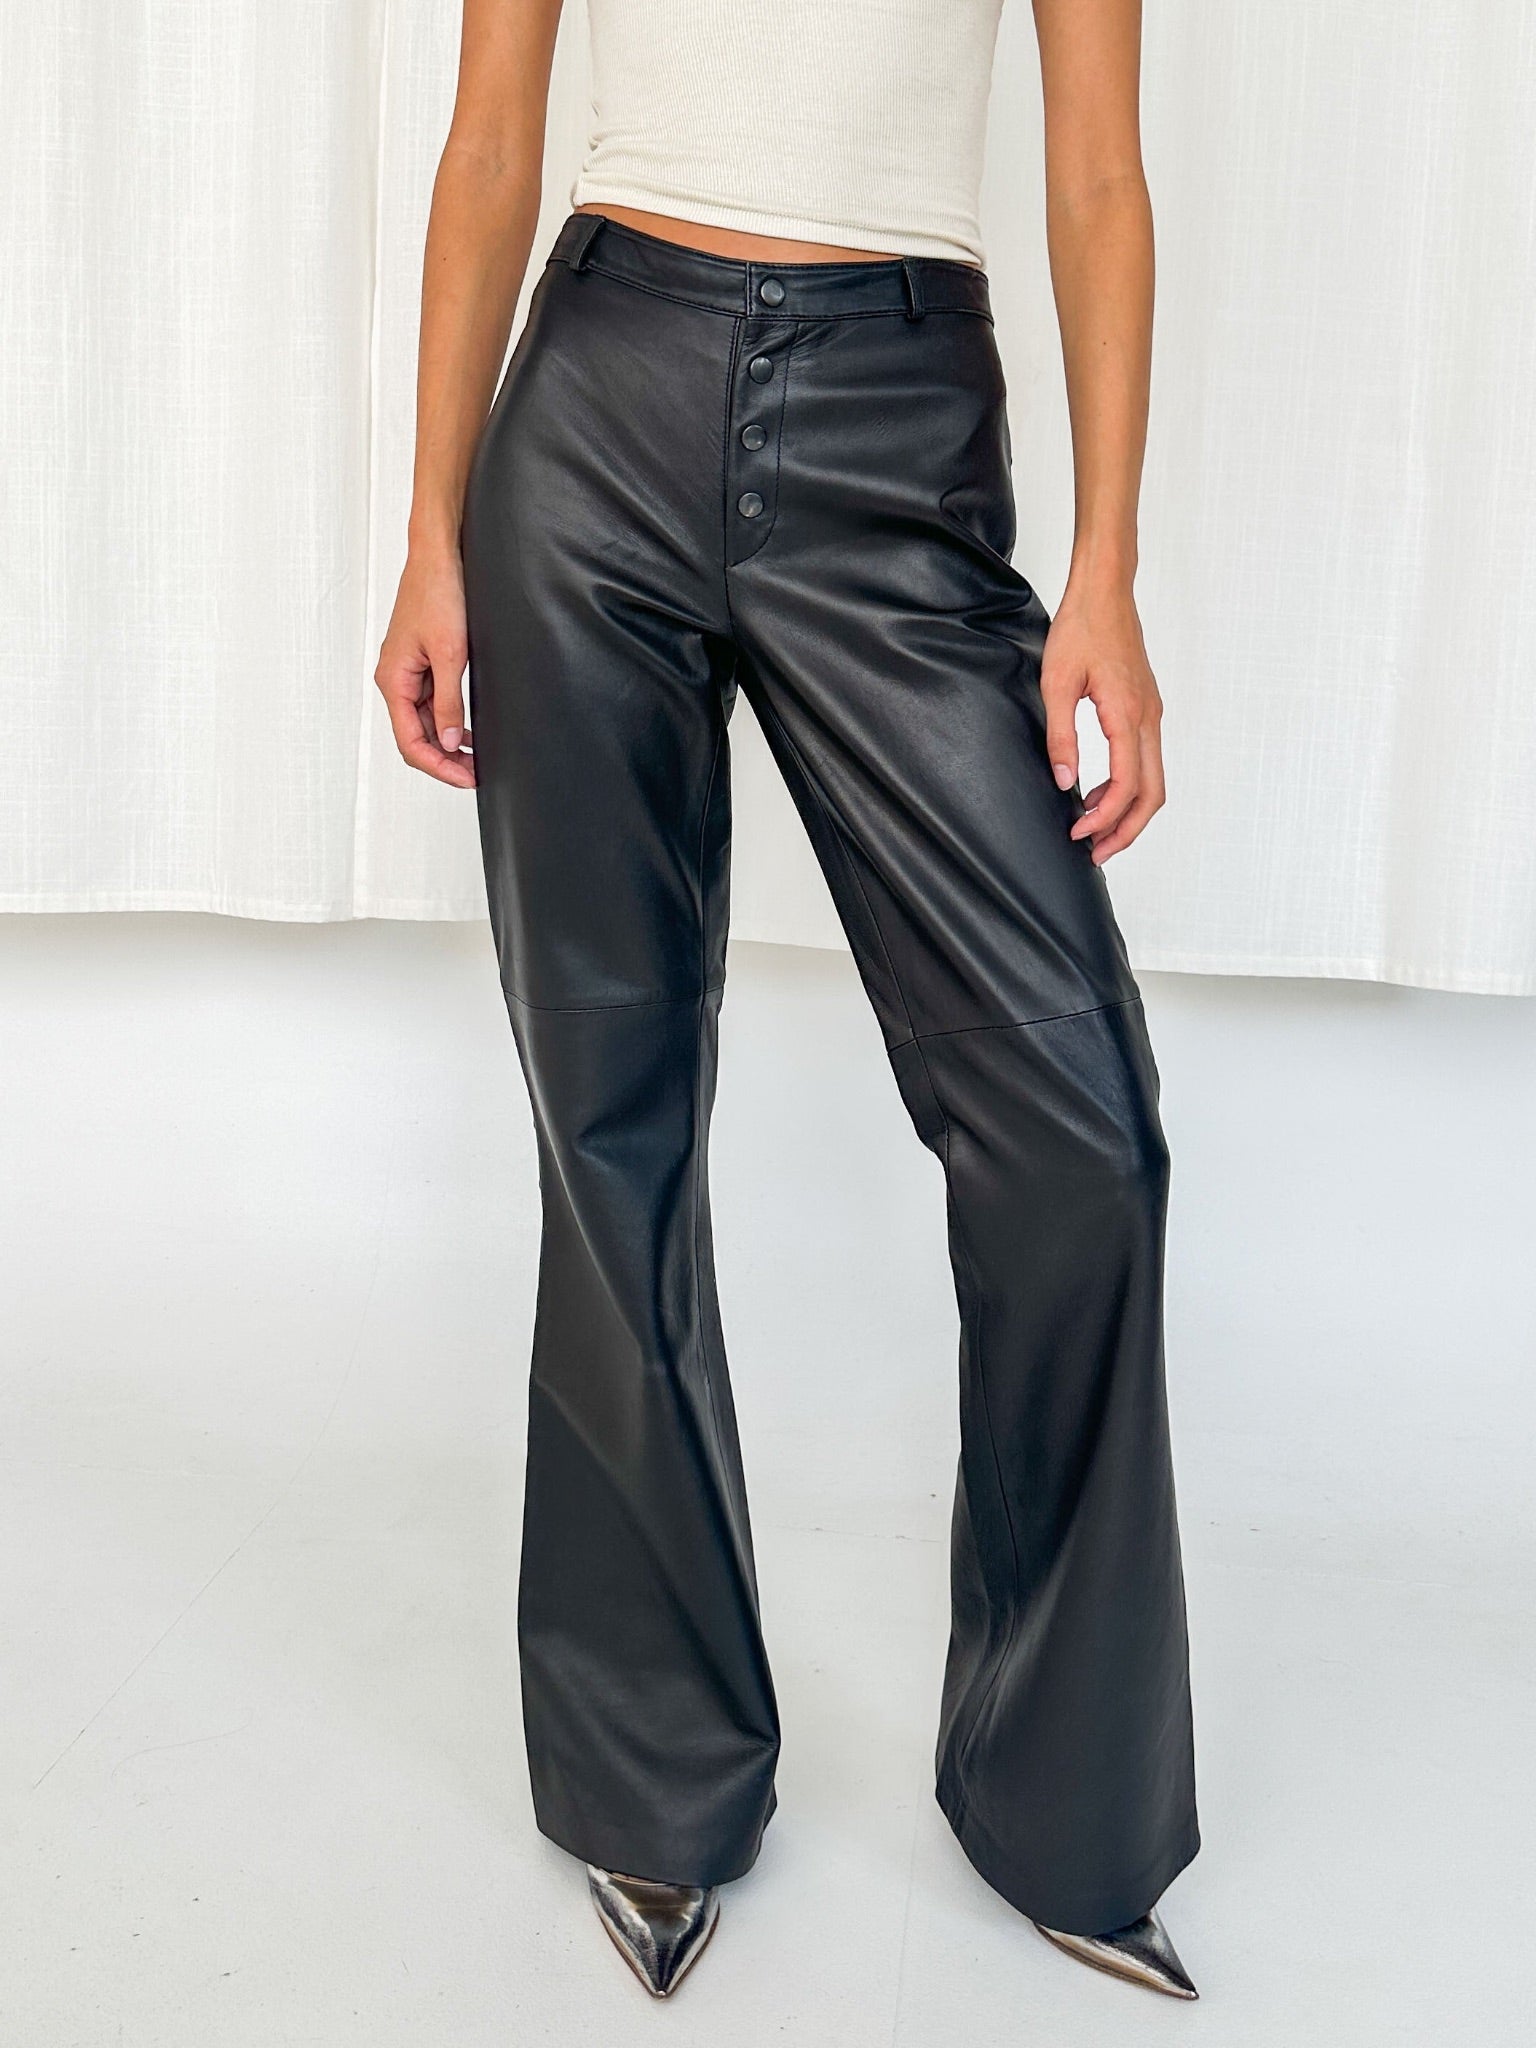 Black Leather Flared Studded Pants (M) - 2